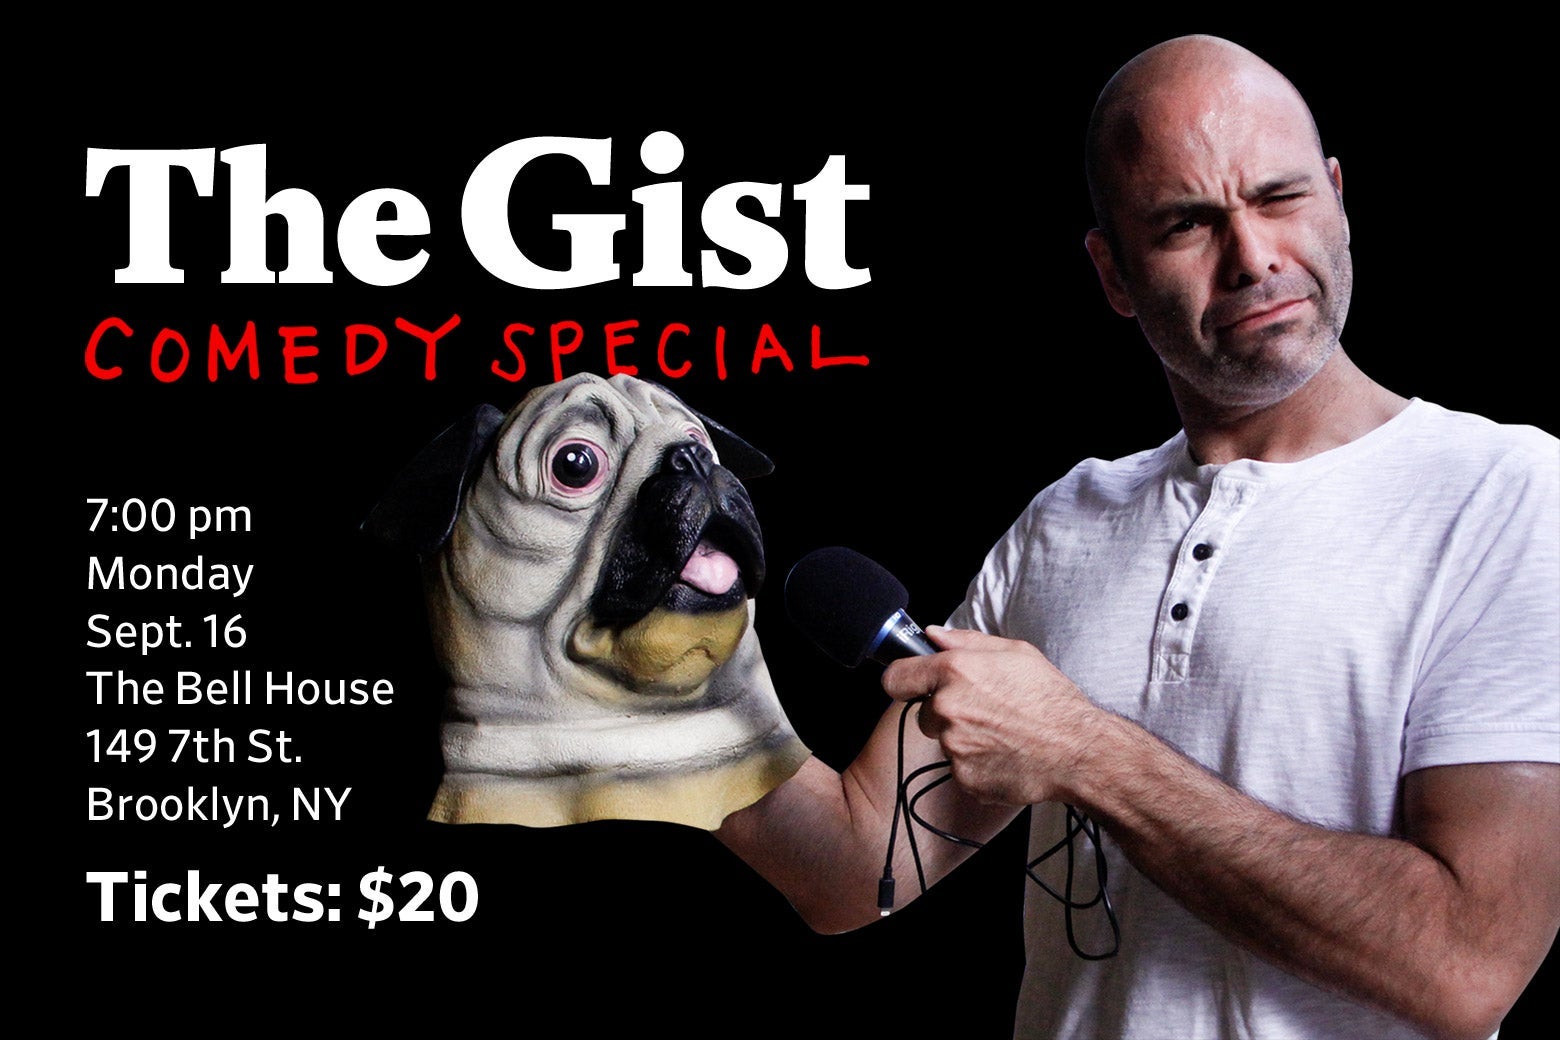 The gist comedy festival